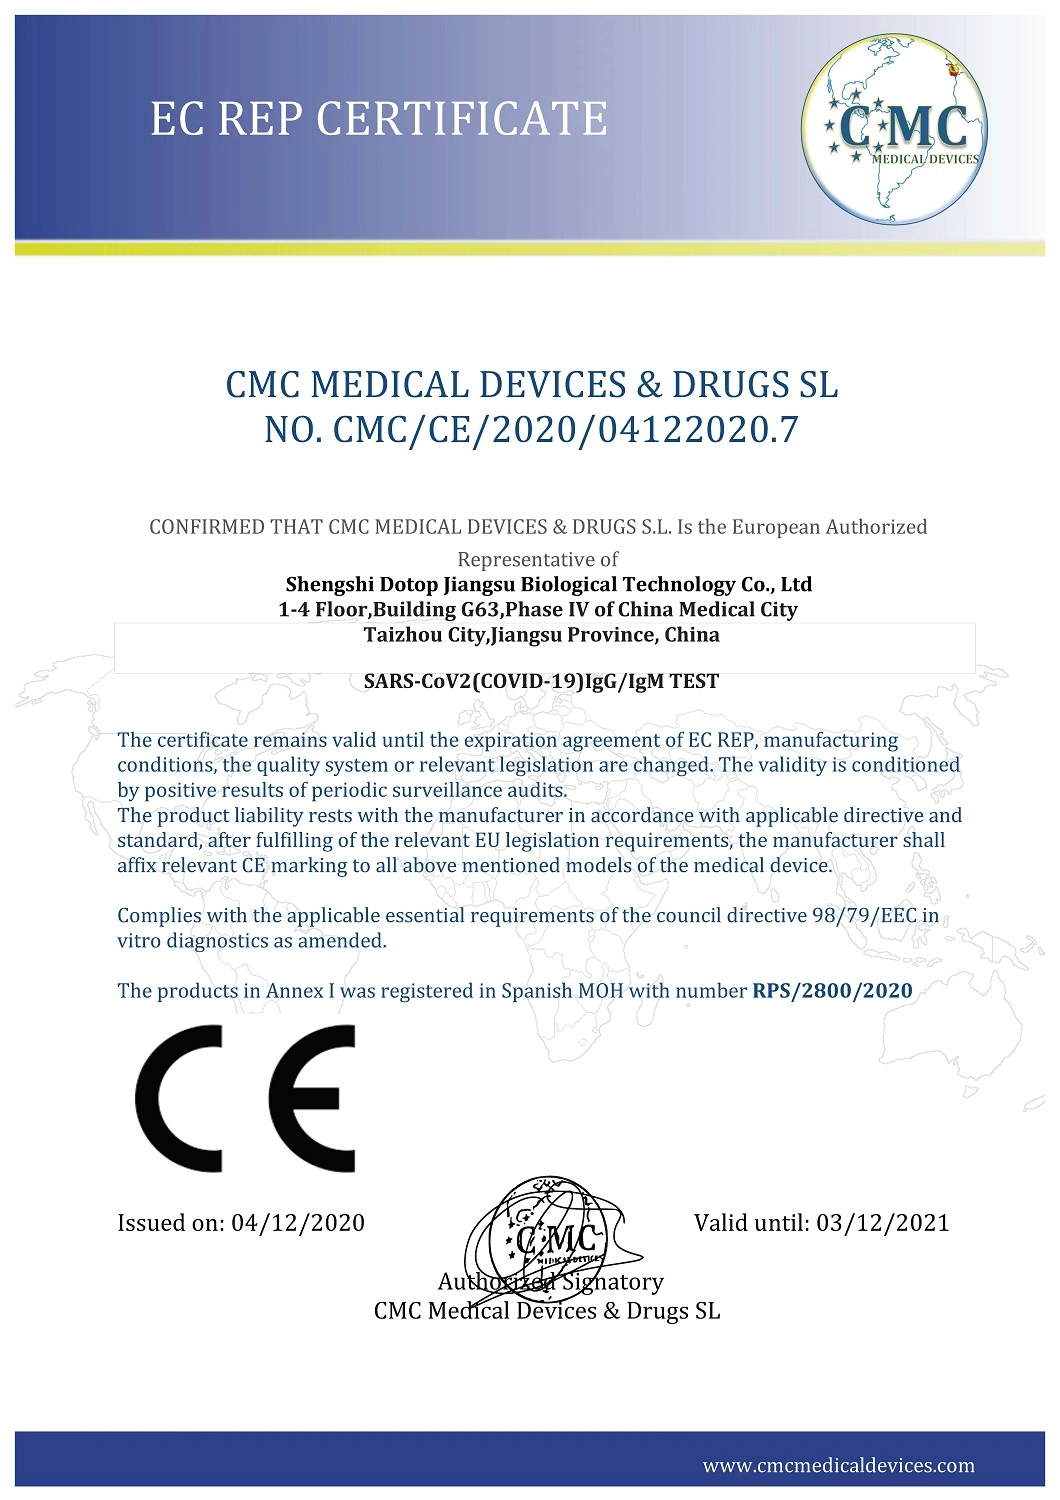 Igm/Igg Rapid Test Card with CE/FDA